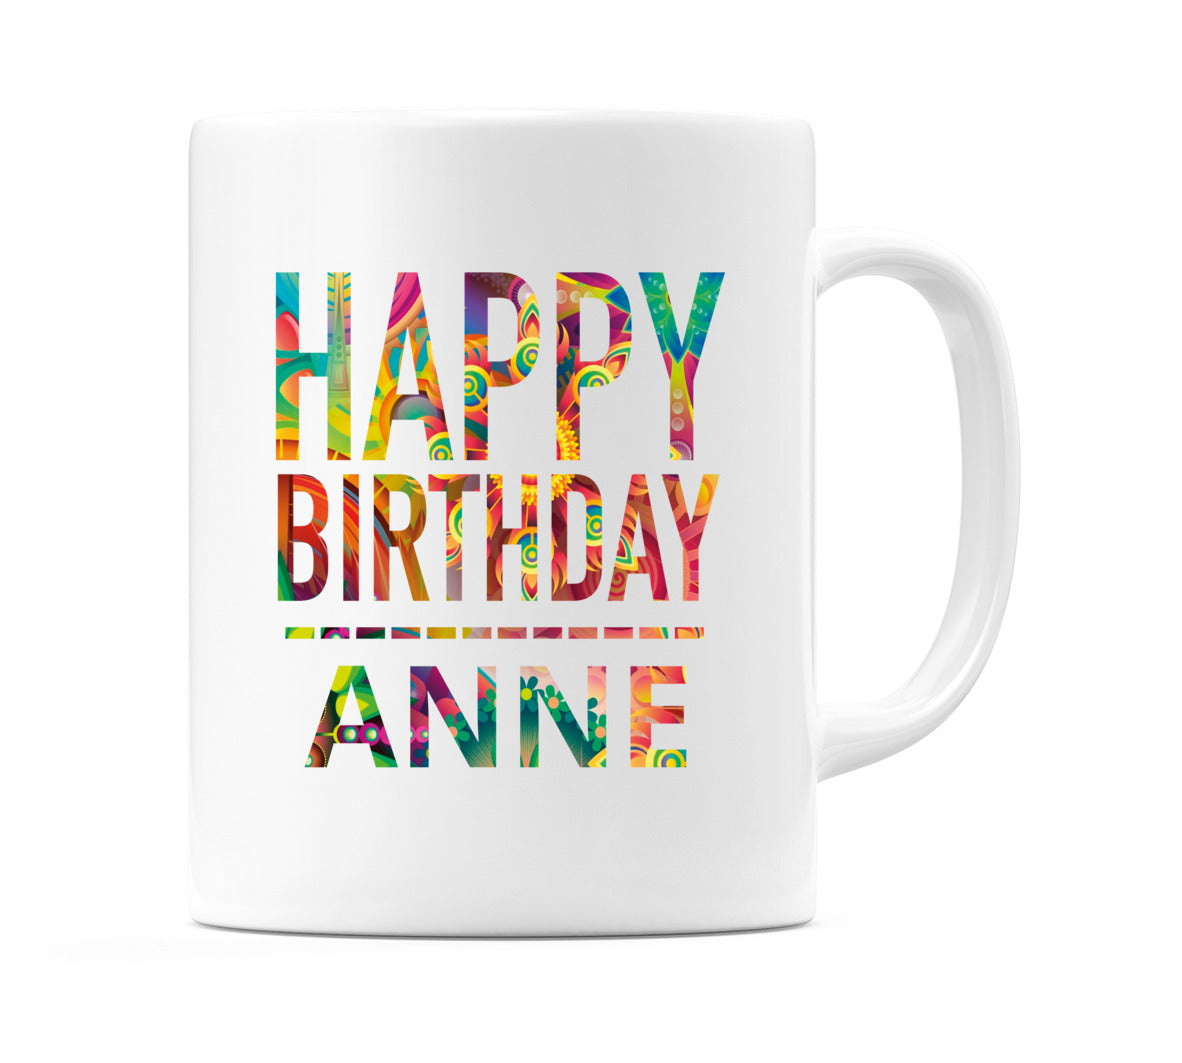 Happy Birthday Anne (Tie Dye Effect) Mug Cup by WeDoMugs